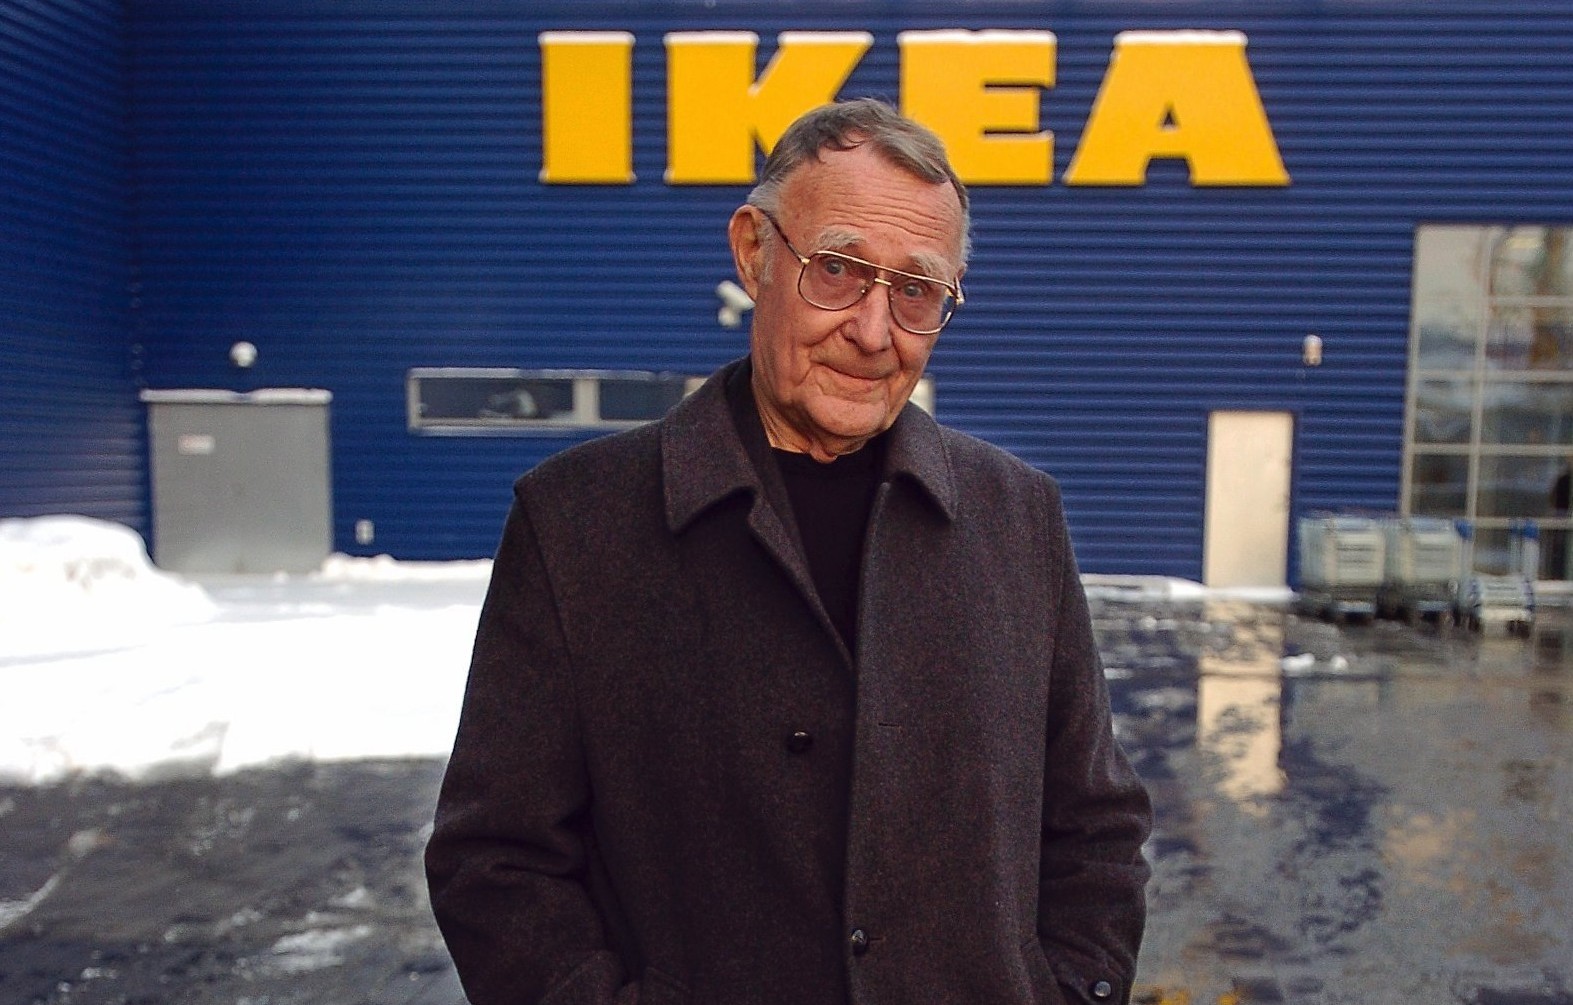 Founder of global furniture giant, IKEA, Ingvar Kamprad has died aged 91